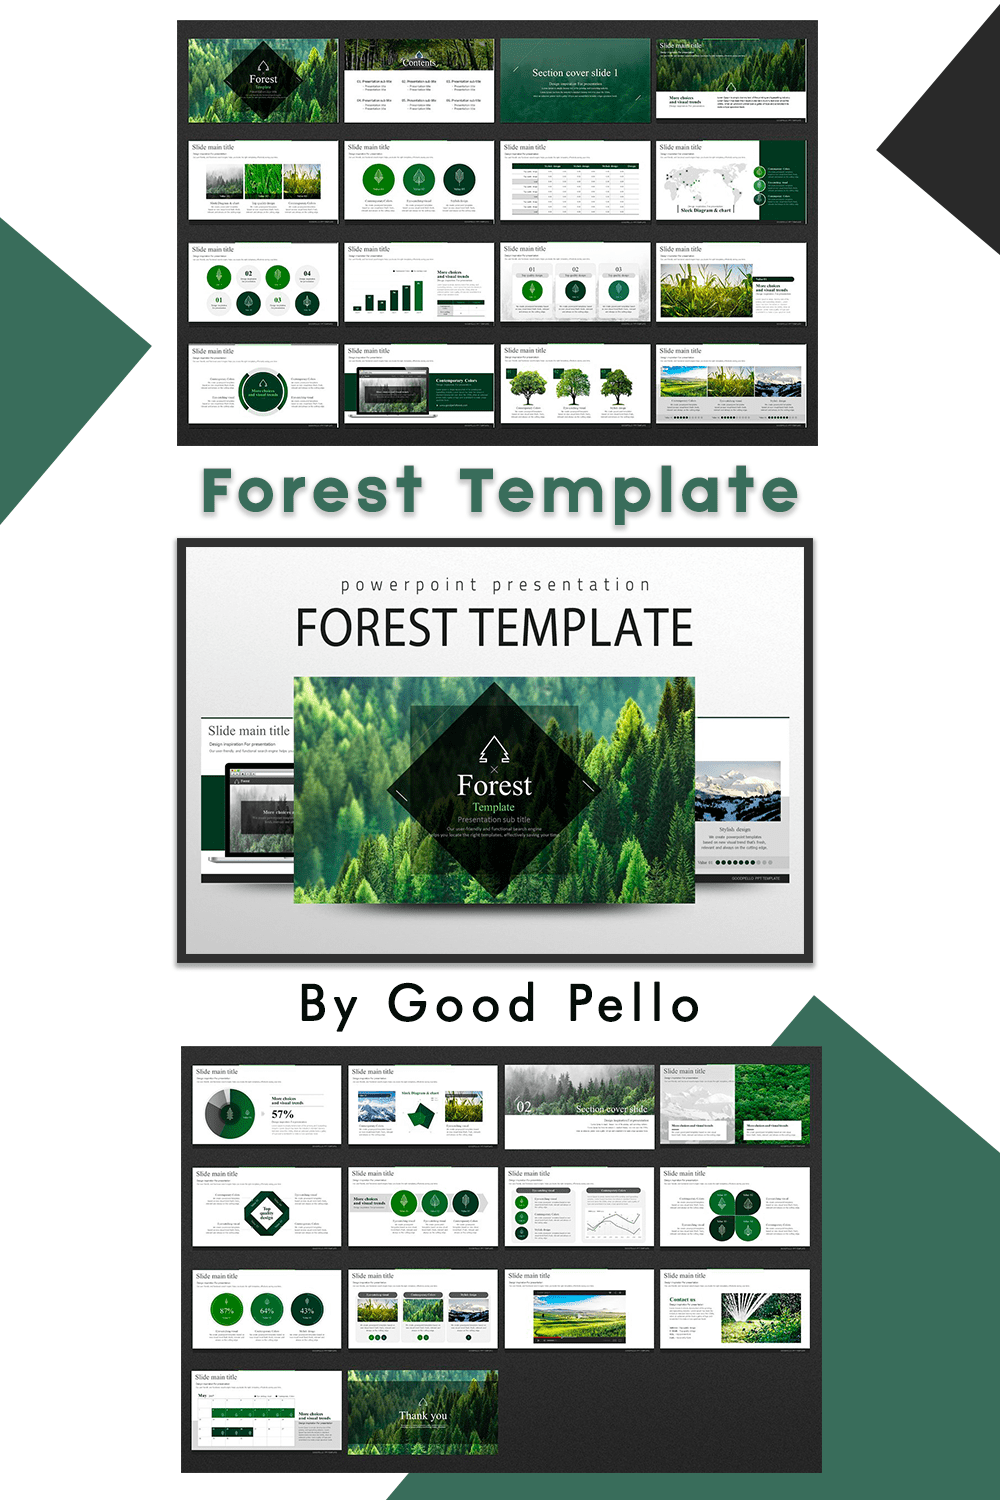 Forest Template Pinterest1.